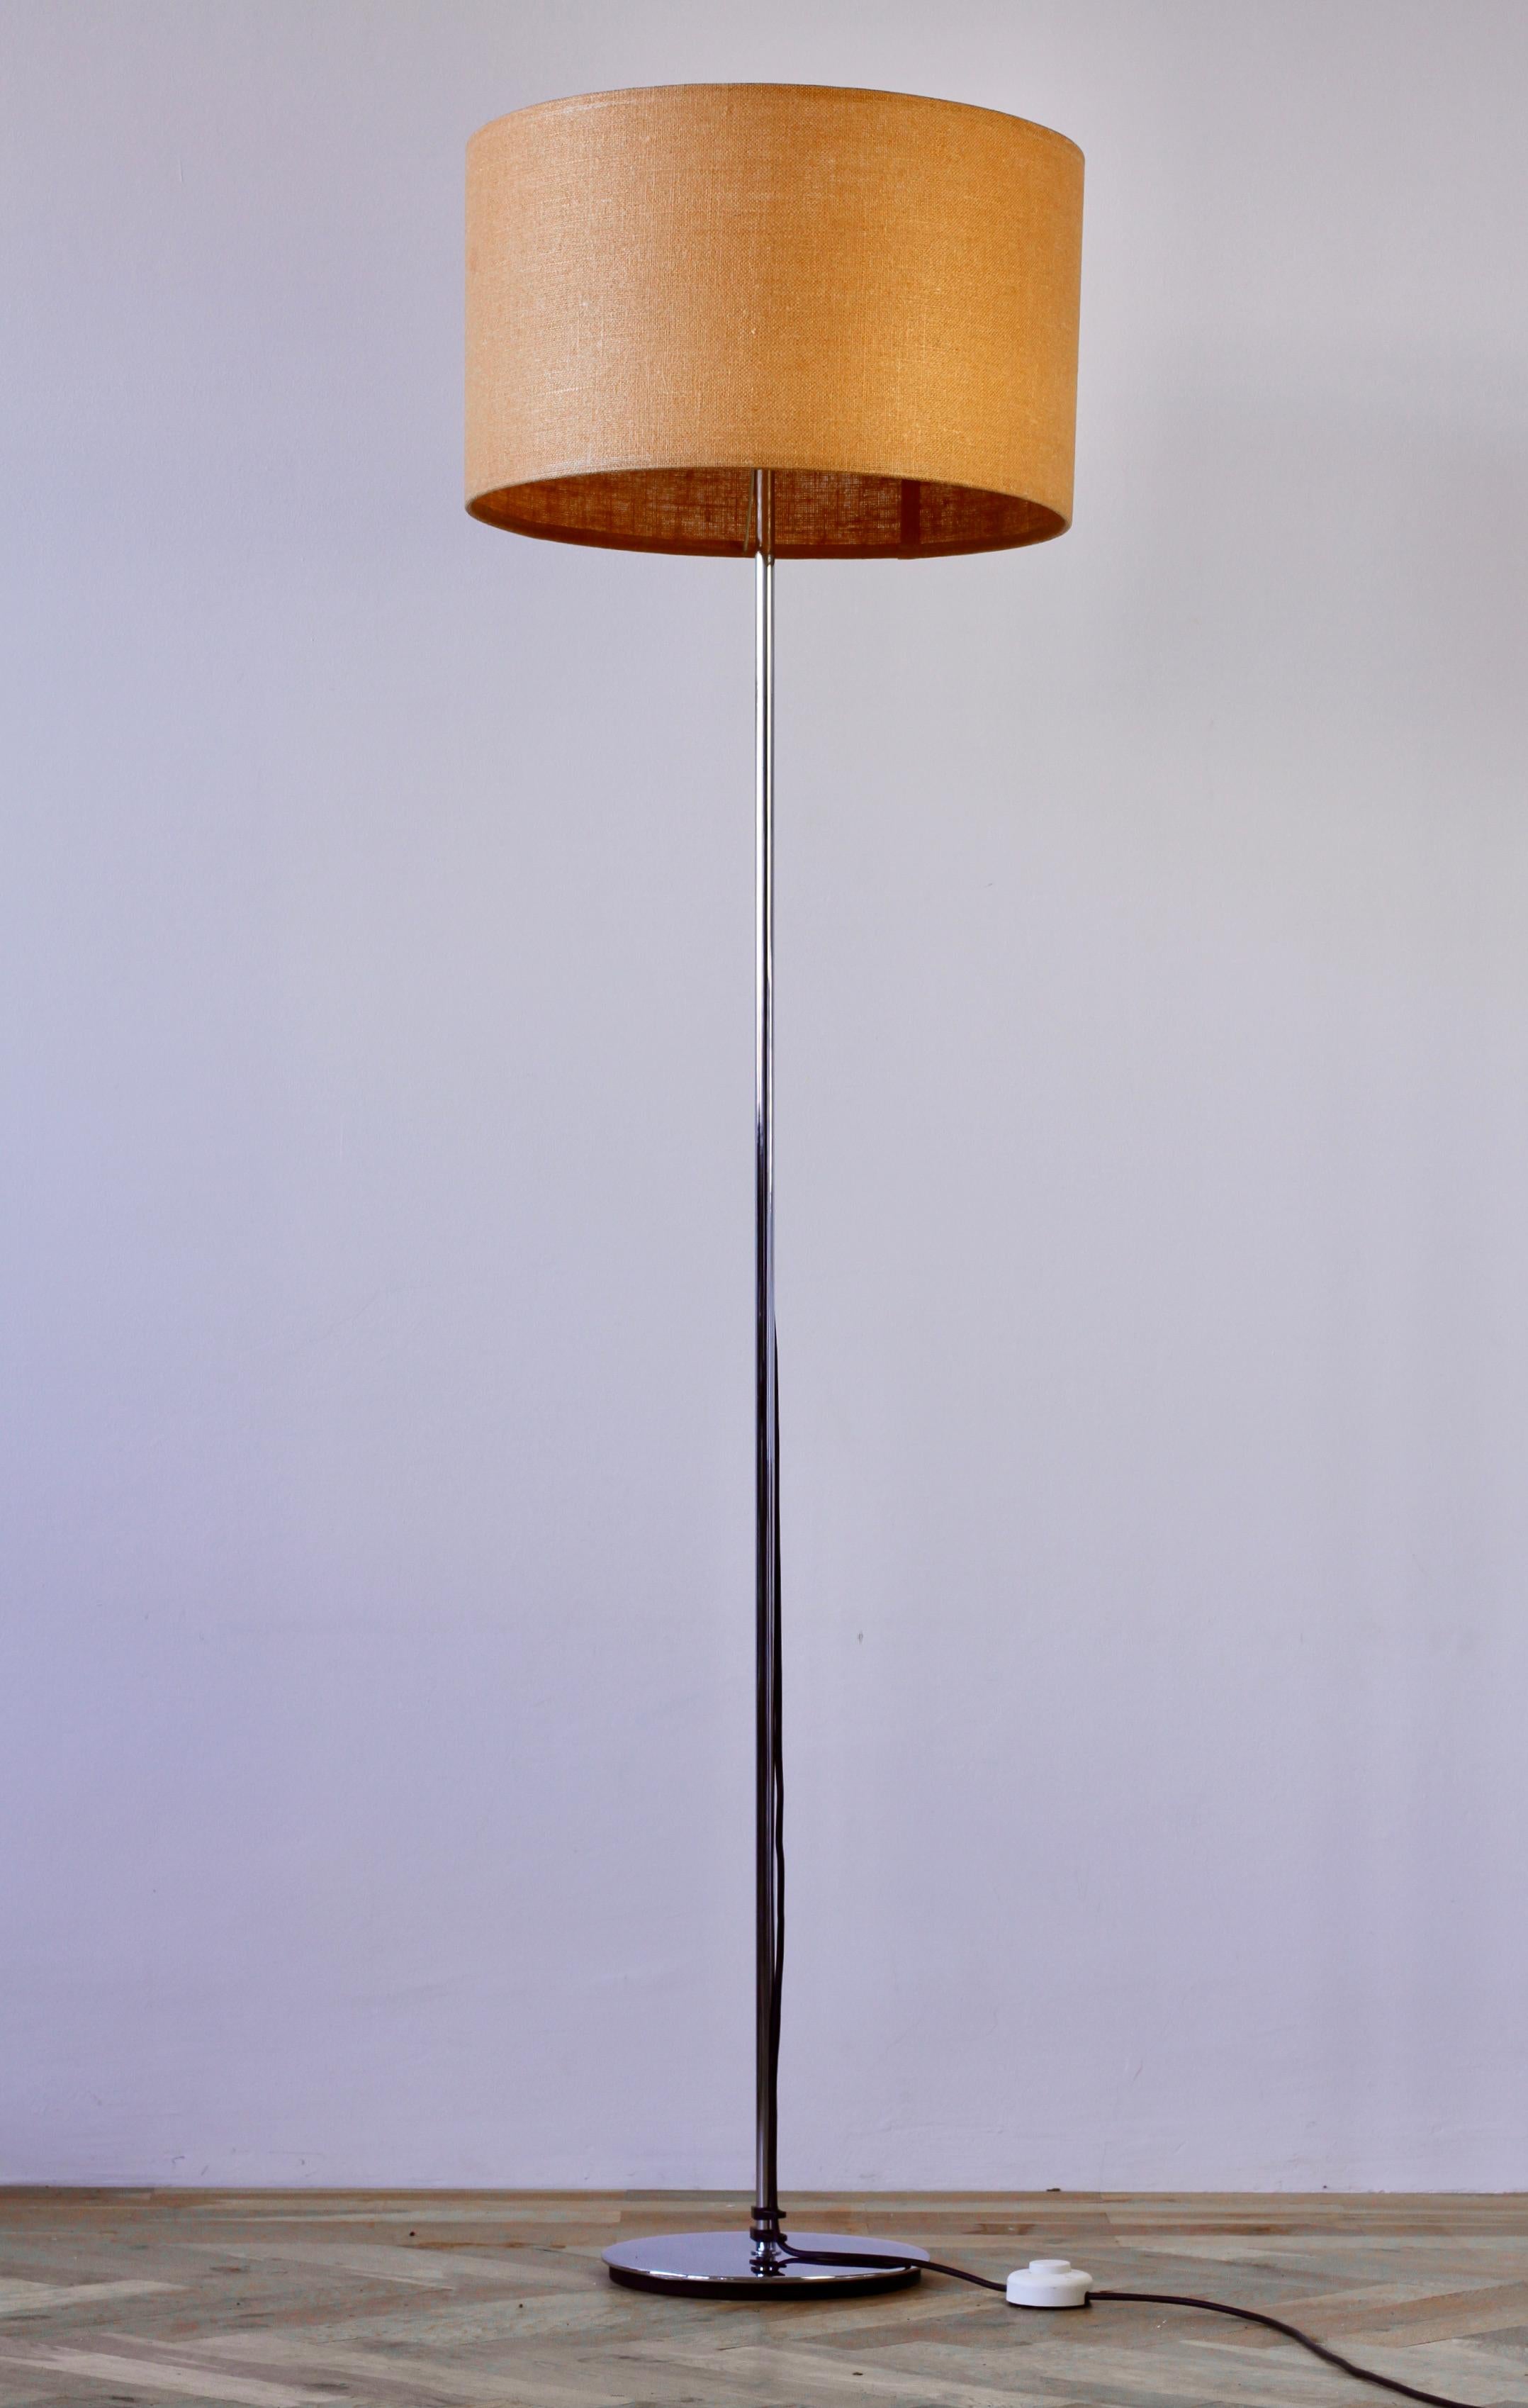 Plated Staff Leuchten Mid-Century Vintage German Chrome Height Adjustable Floor Lamp For Sale